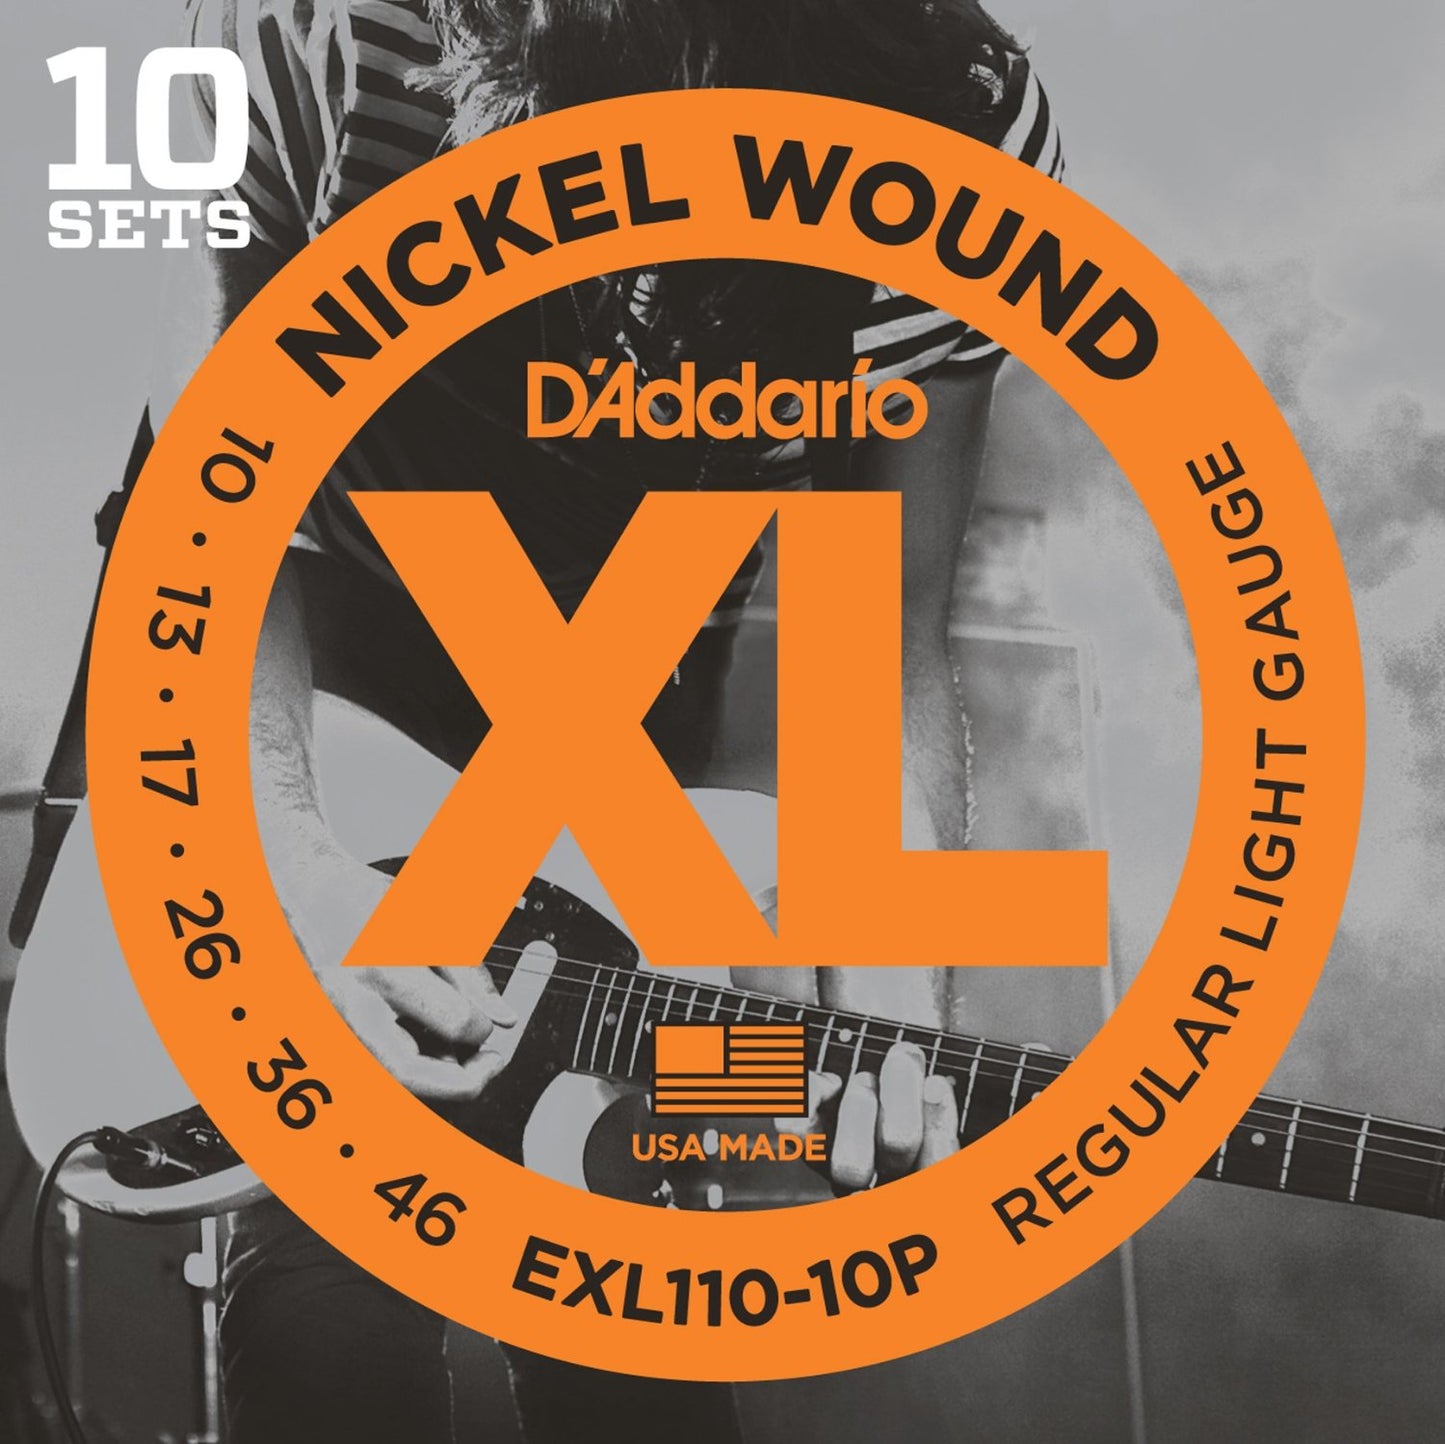 D’Addario EXL110-10P Nickel Wound Regular Light Electric Guitar Strings - 10-46